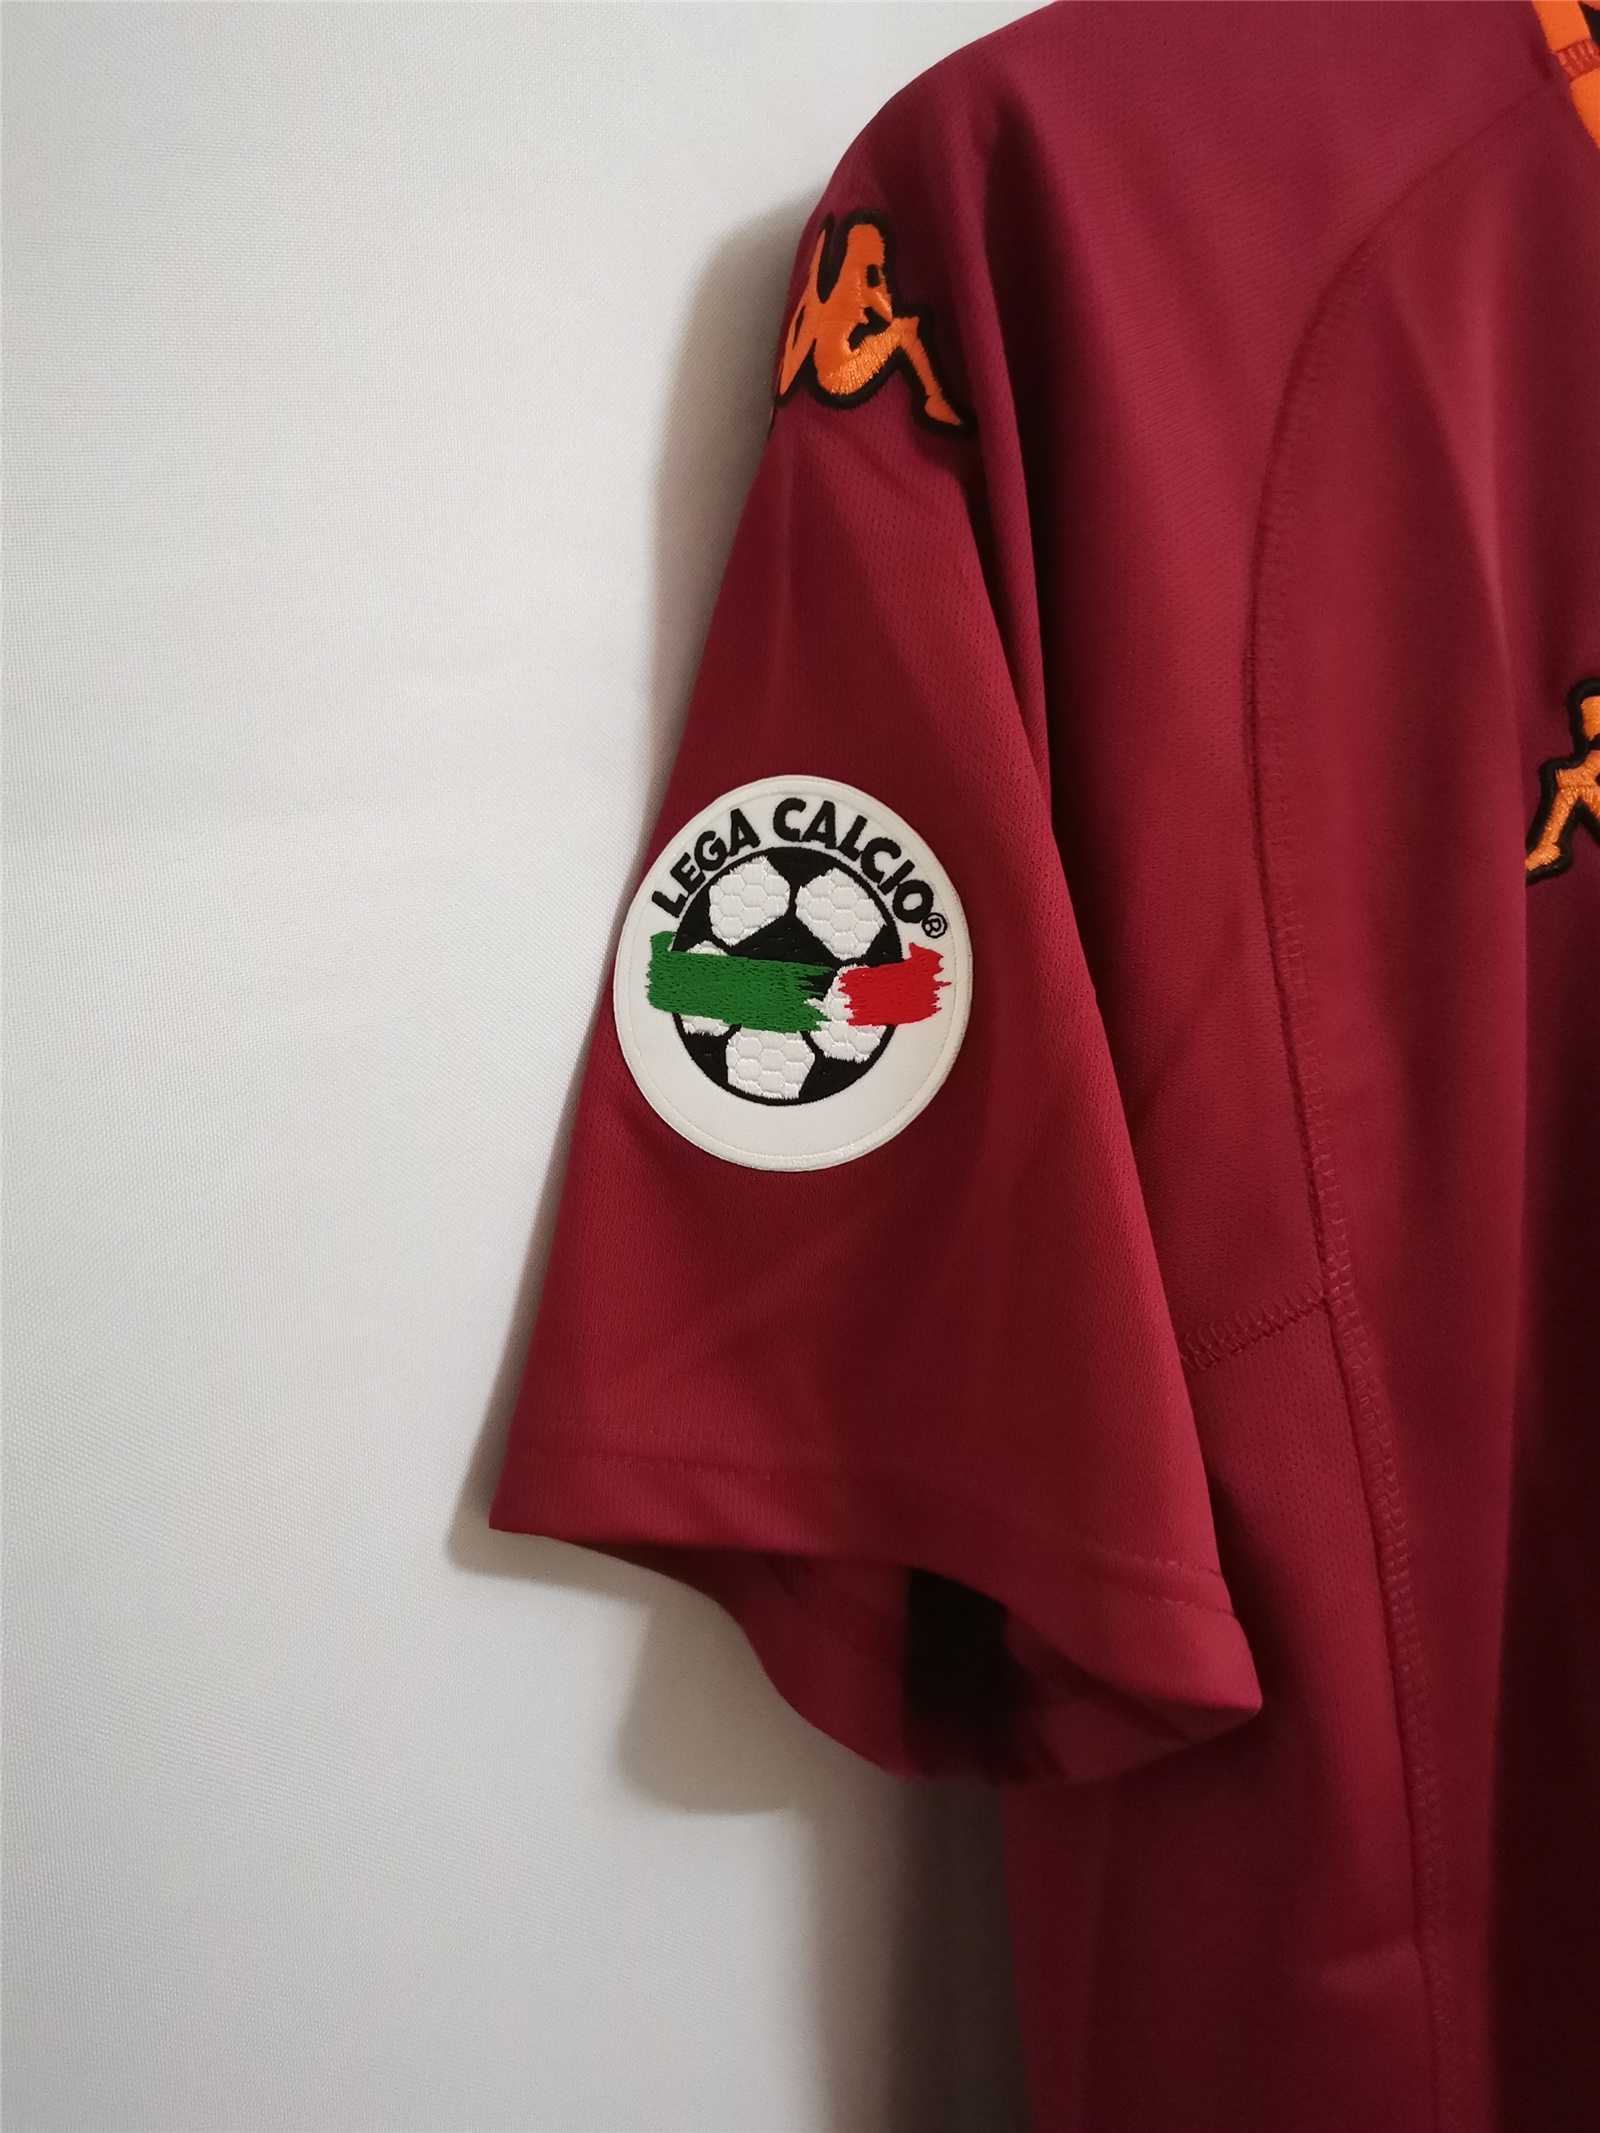 AS Roma 2000-01 Retro Home Jersey